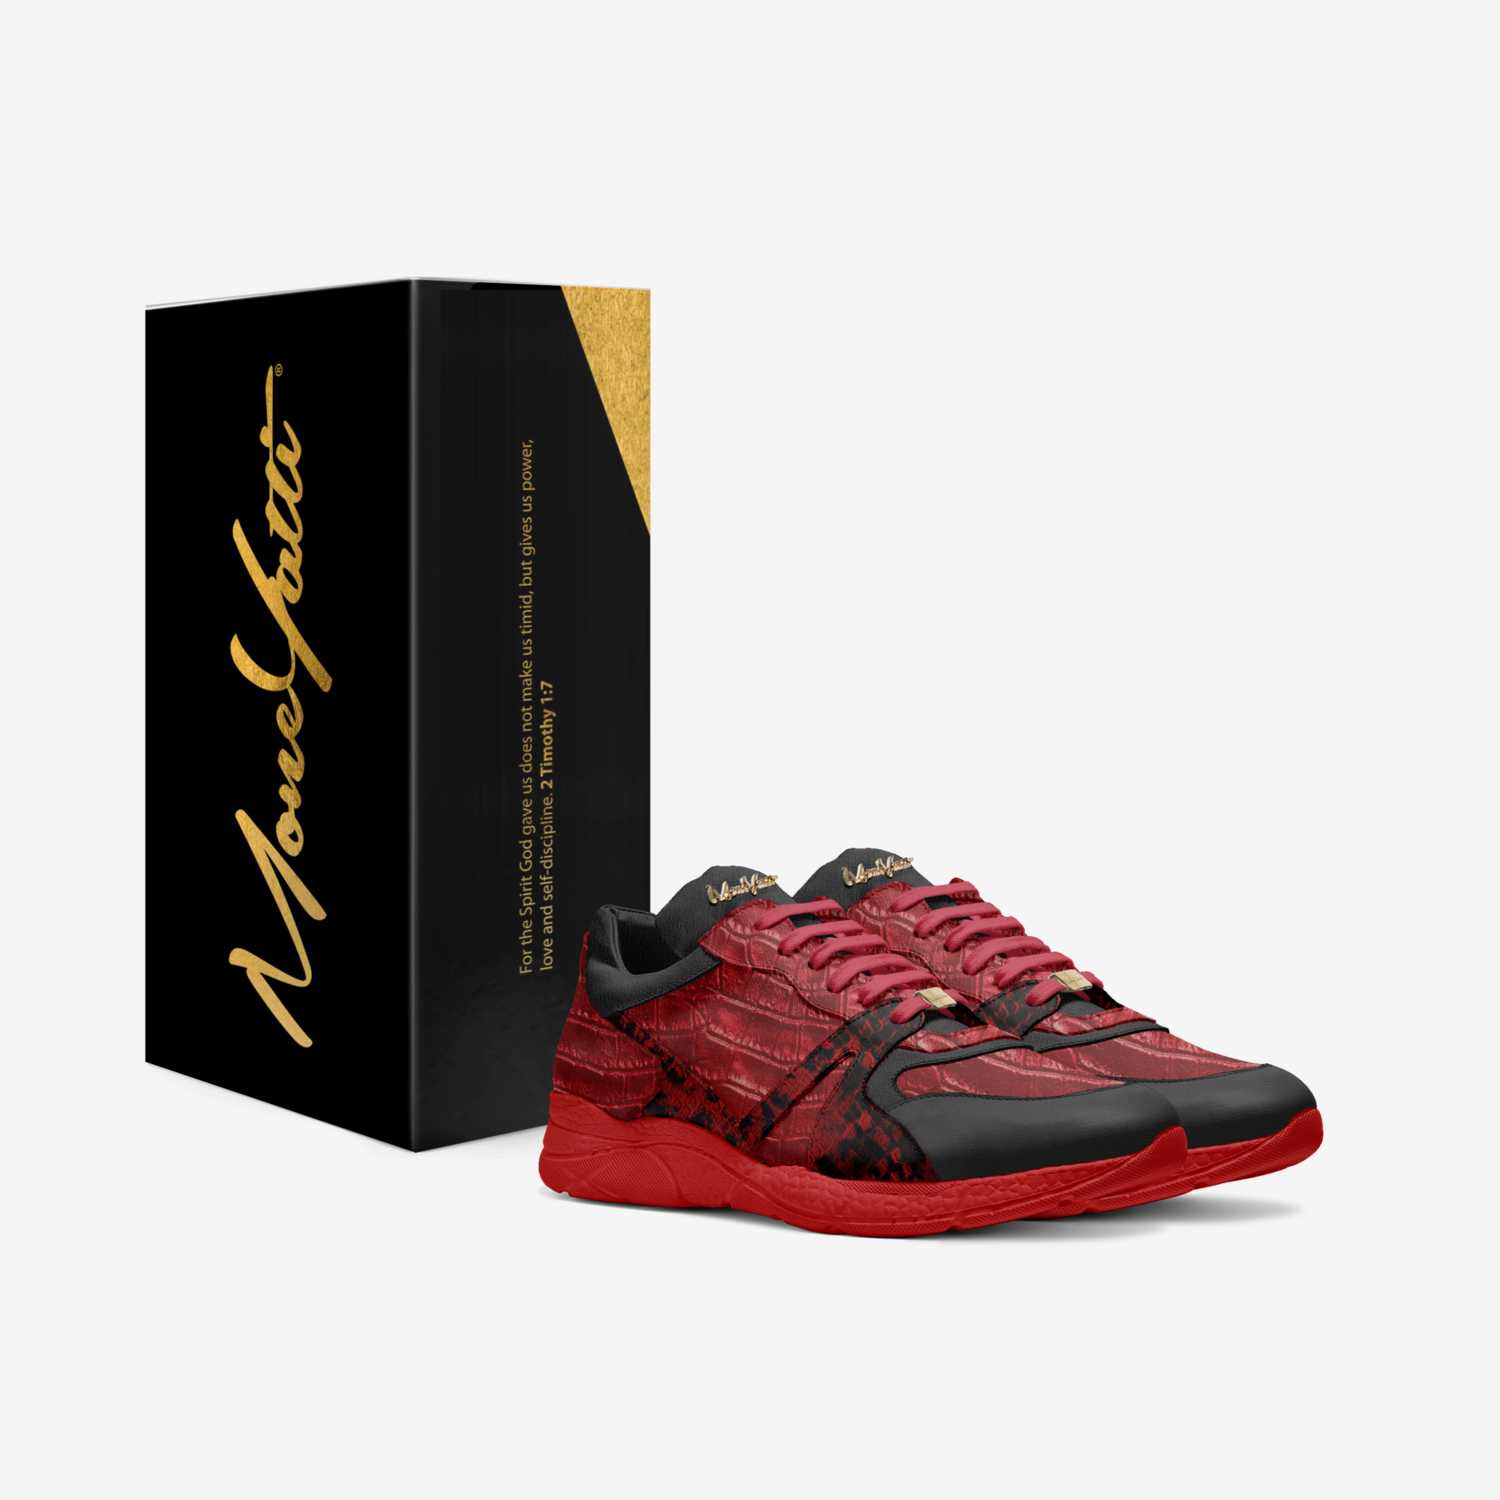 Nem P56 custom made in Italy shoes by Moneyatti Brand | Box view